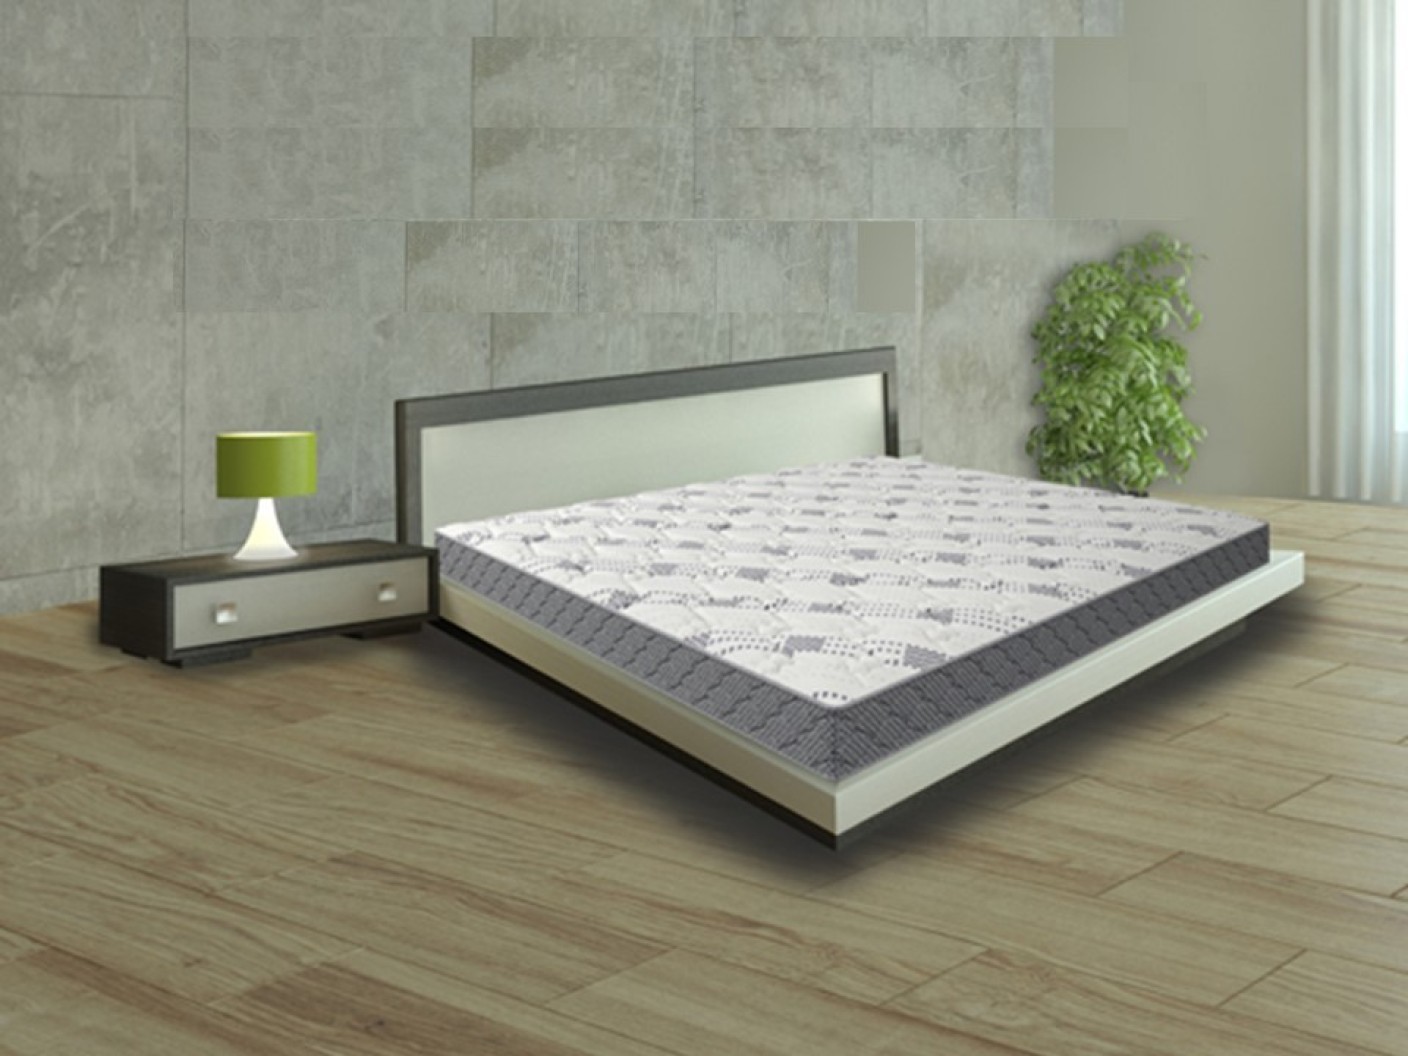 sleepwell spring mattress 6 inch price